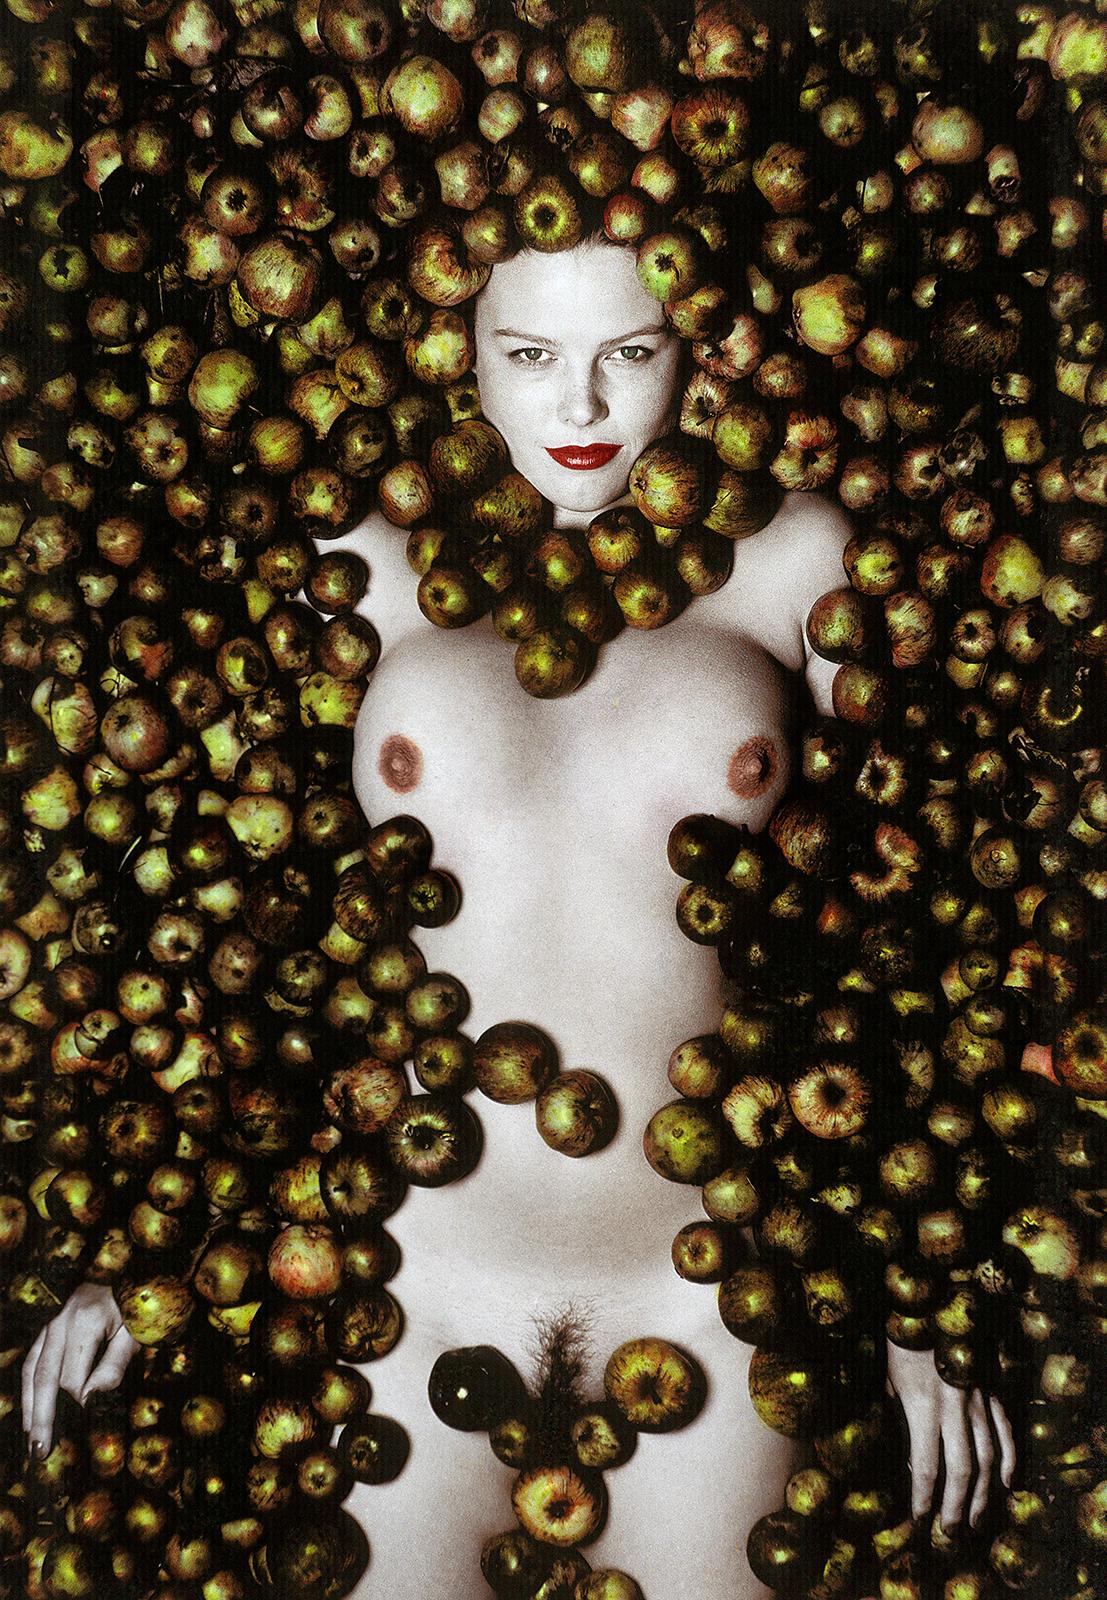 Ian Sanderson Color Photograph - Apples - Signed limited edition still life fine art print, Color photo, Model